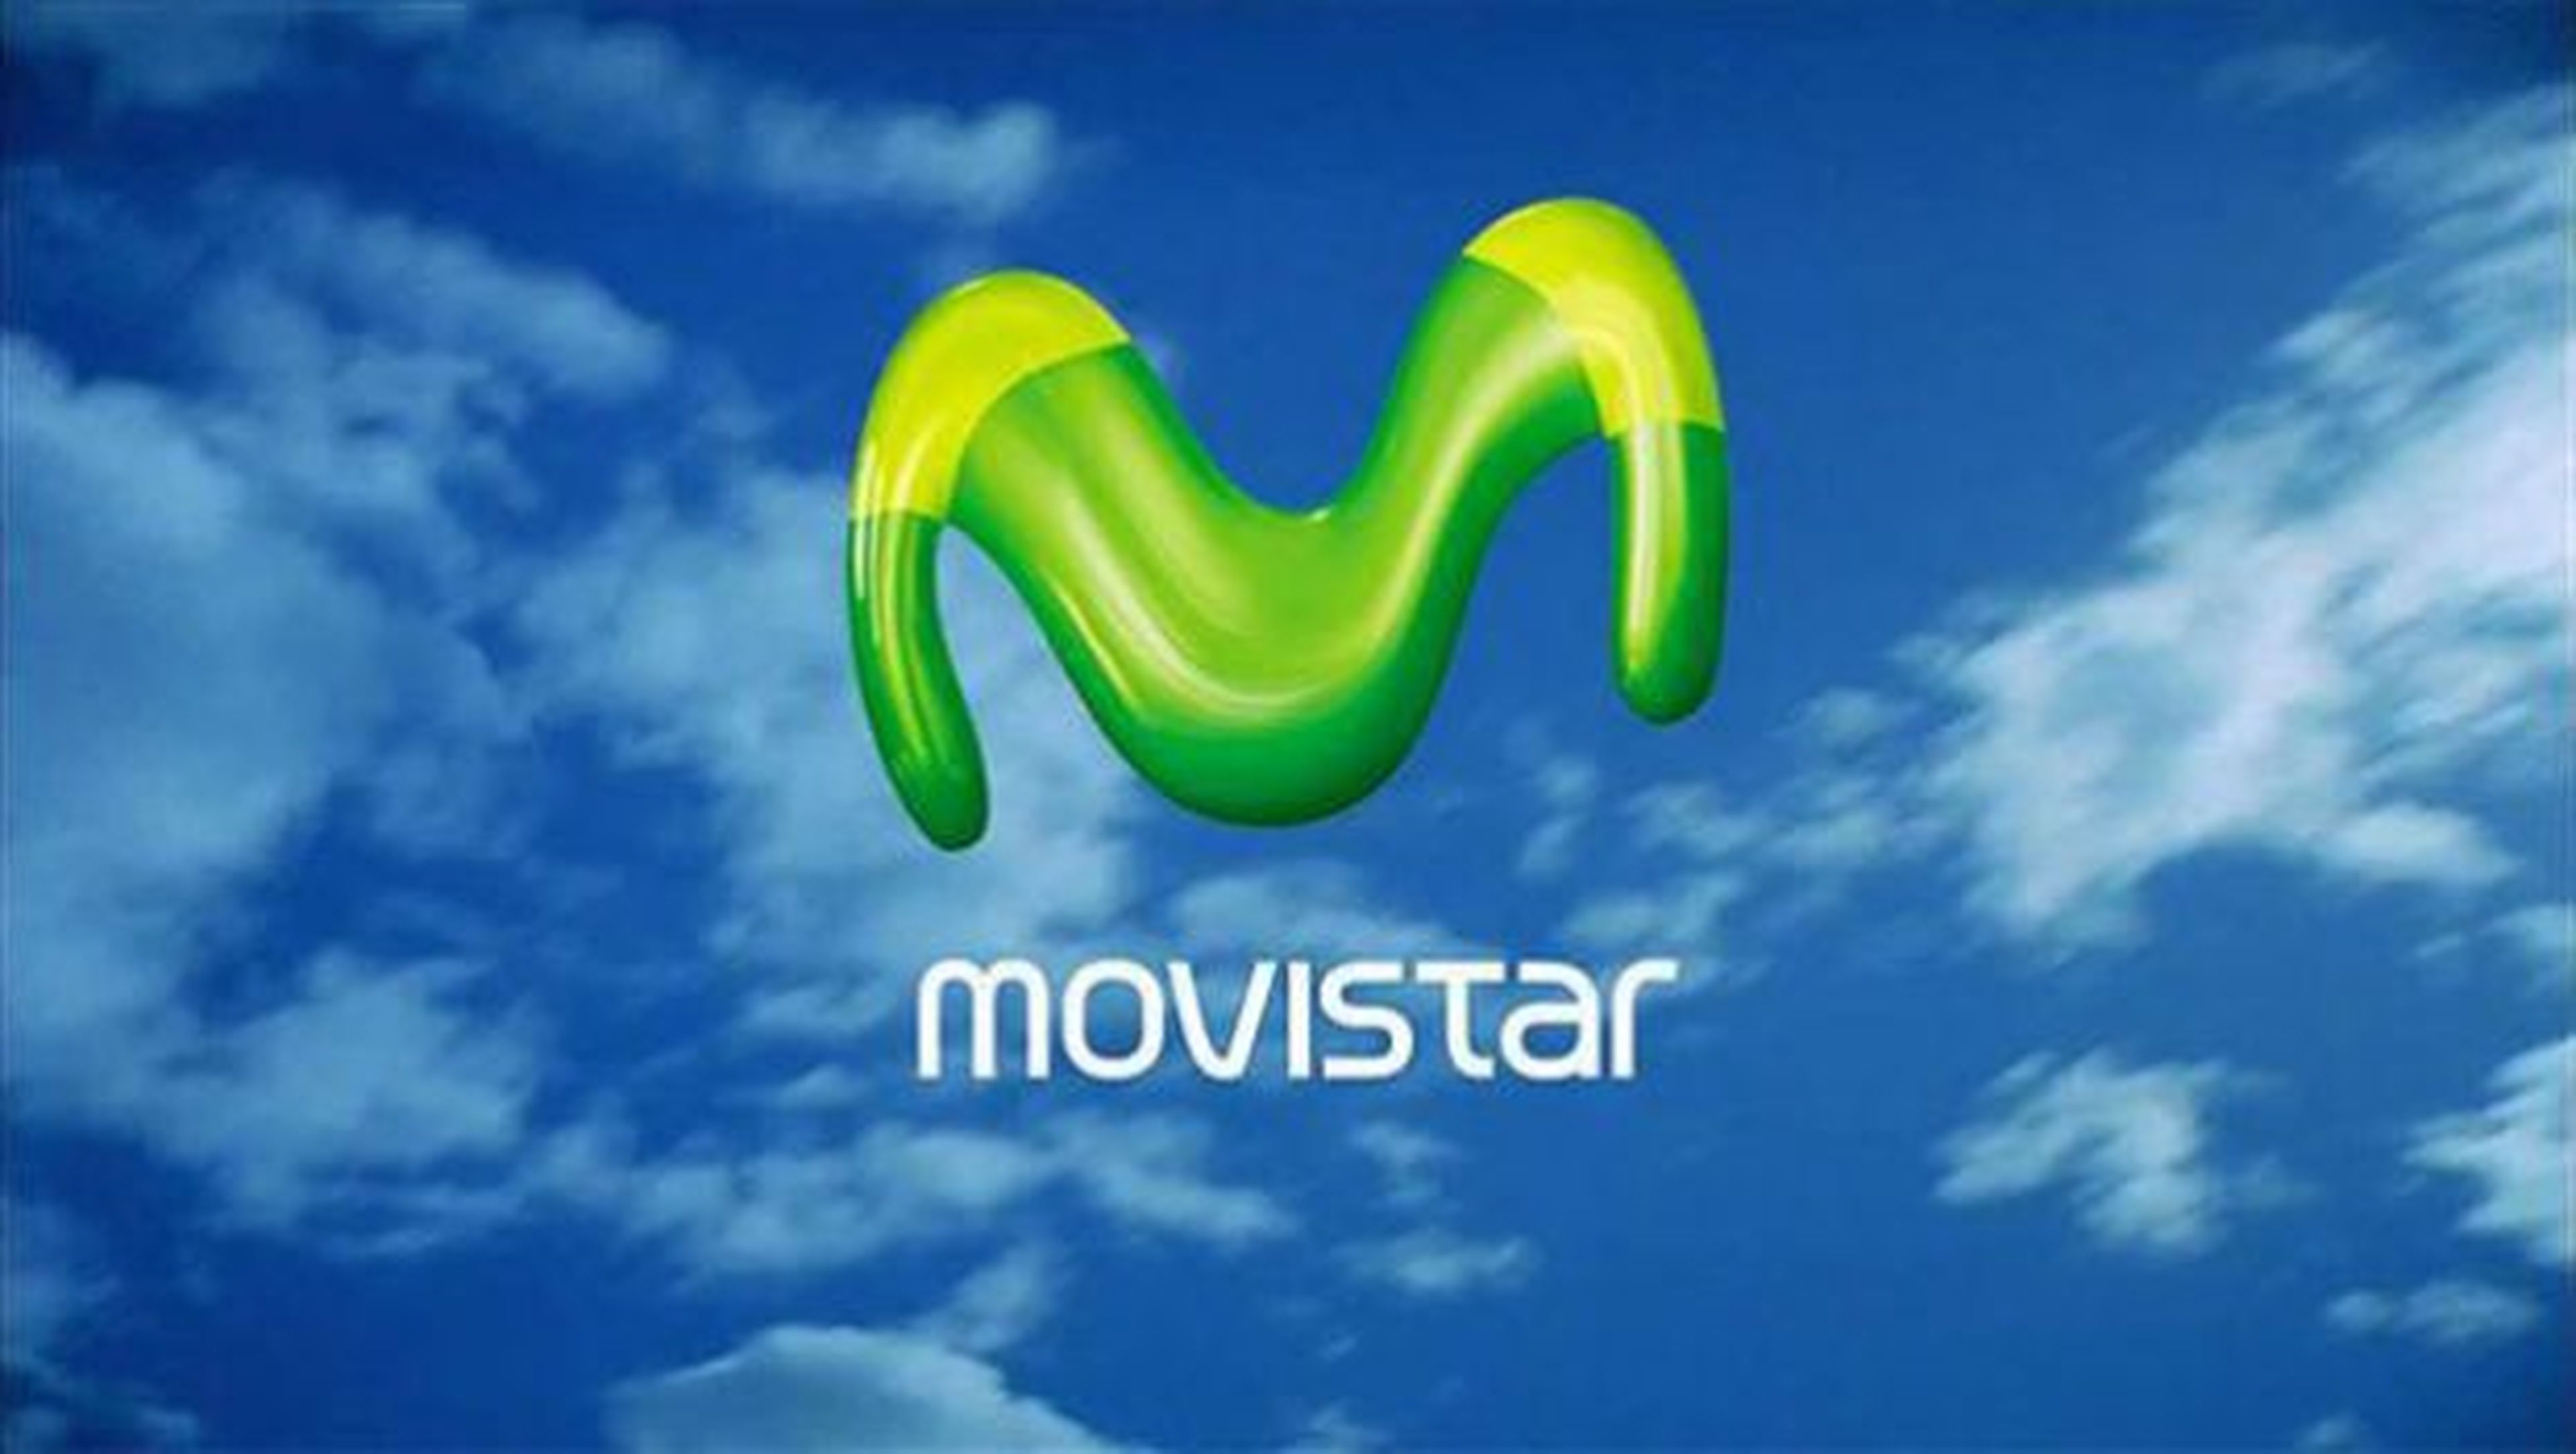 Movistar subida precio tarifas febrero 2018